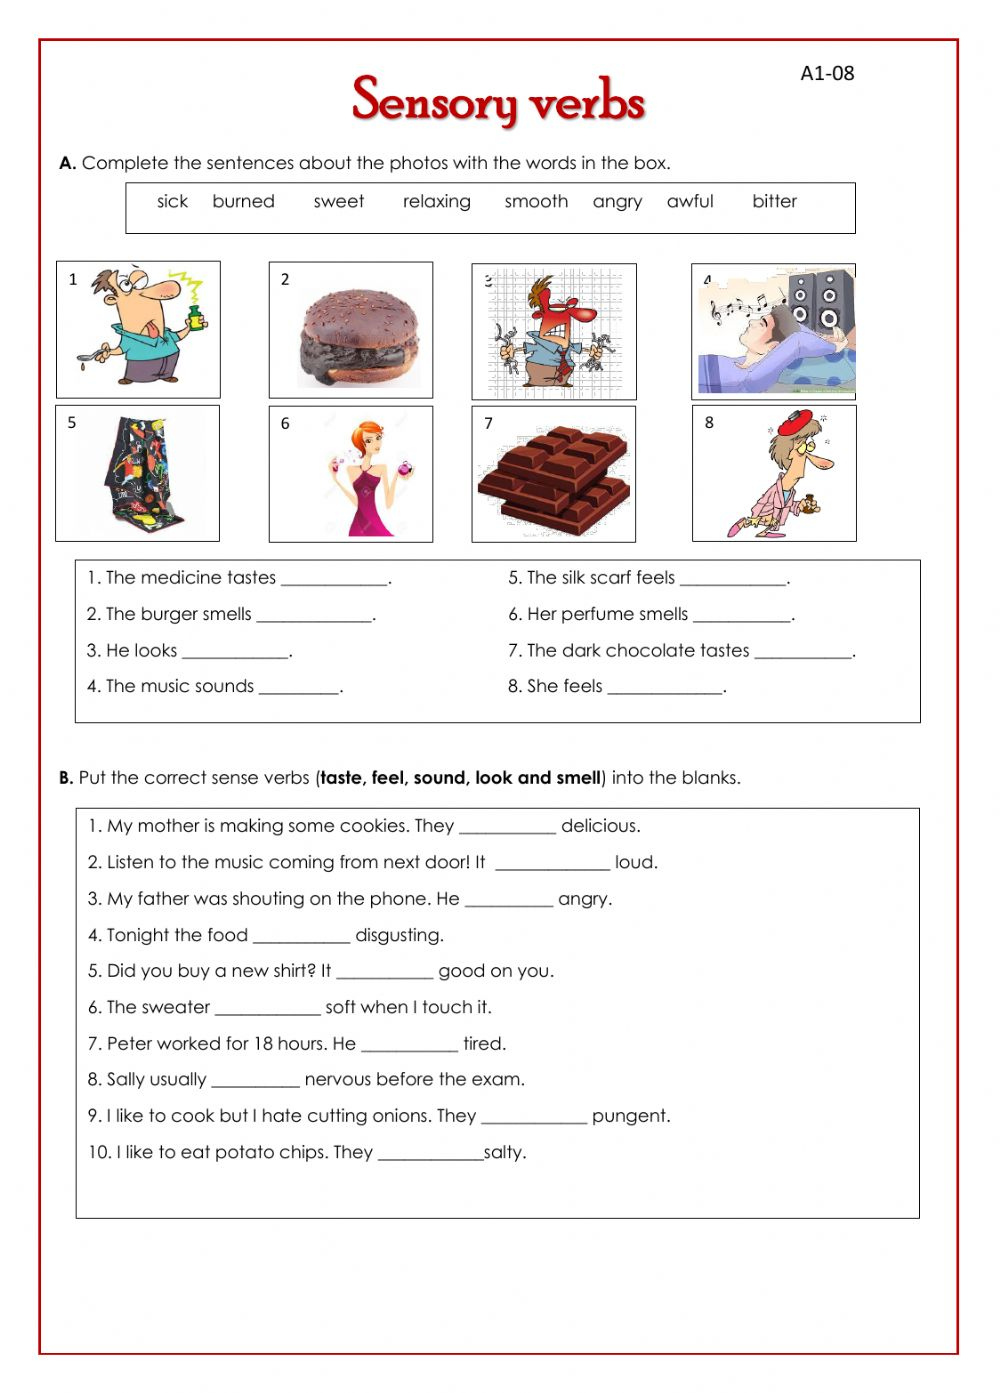 sensory-verbs-worksheet-language-worksheets